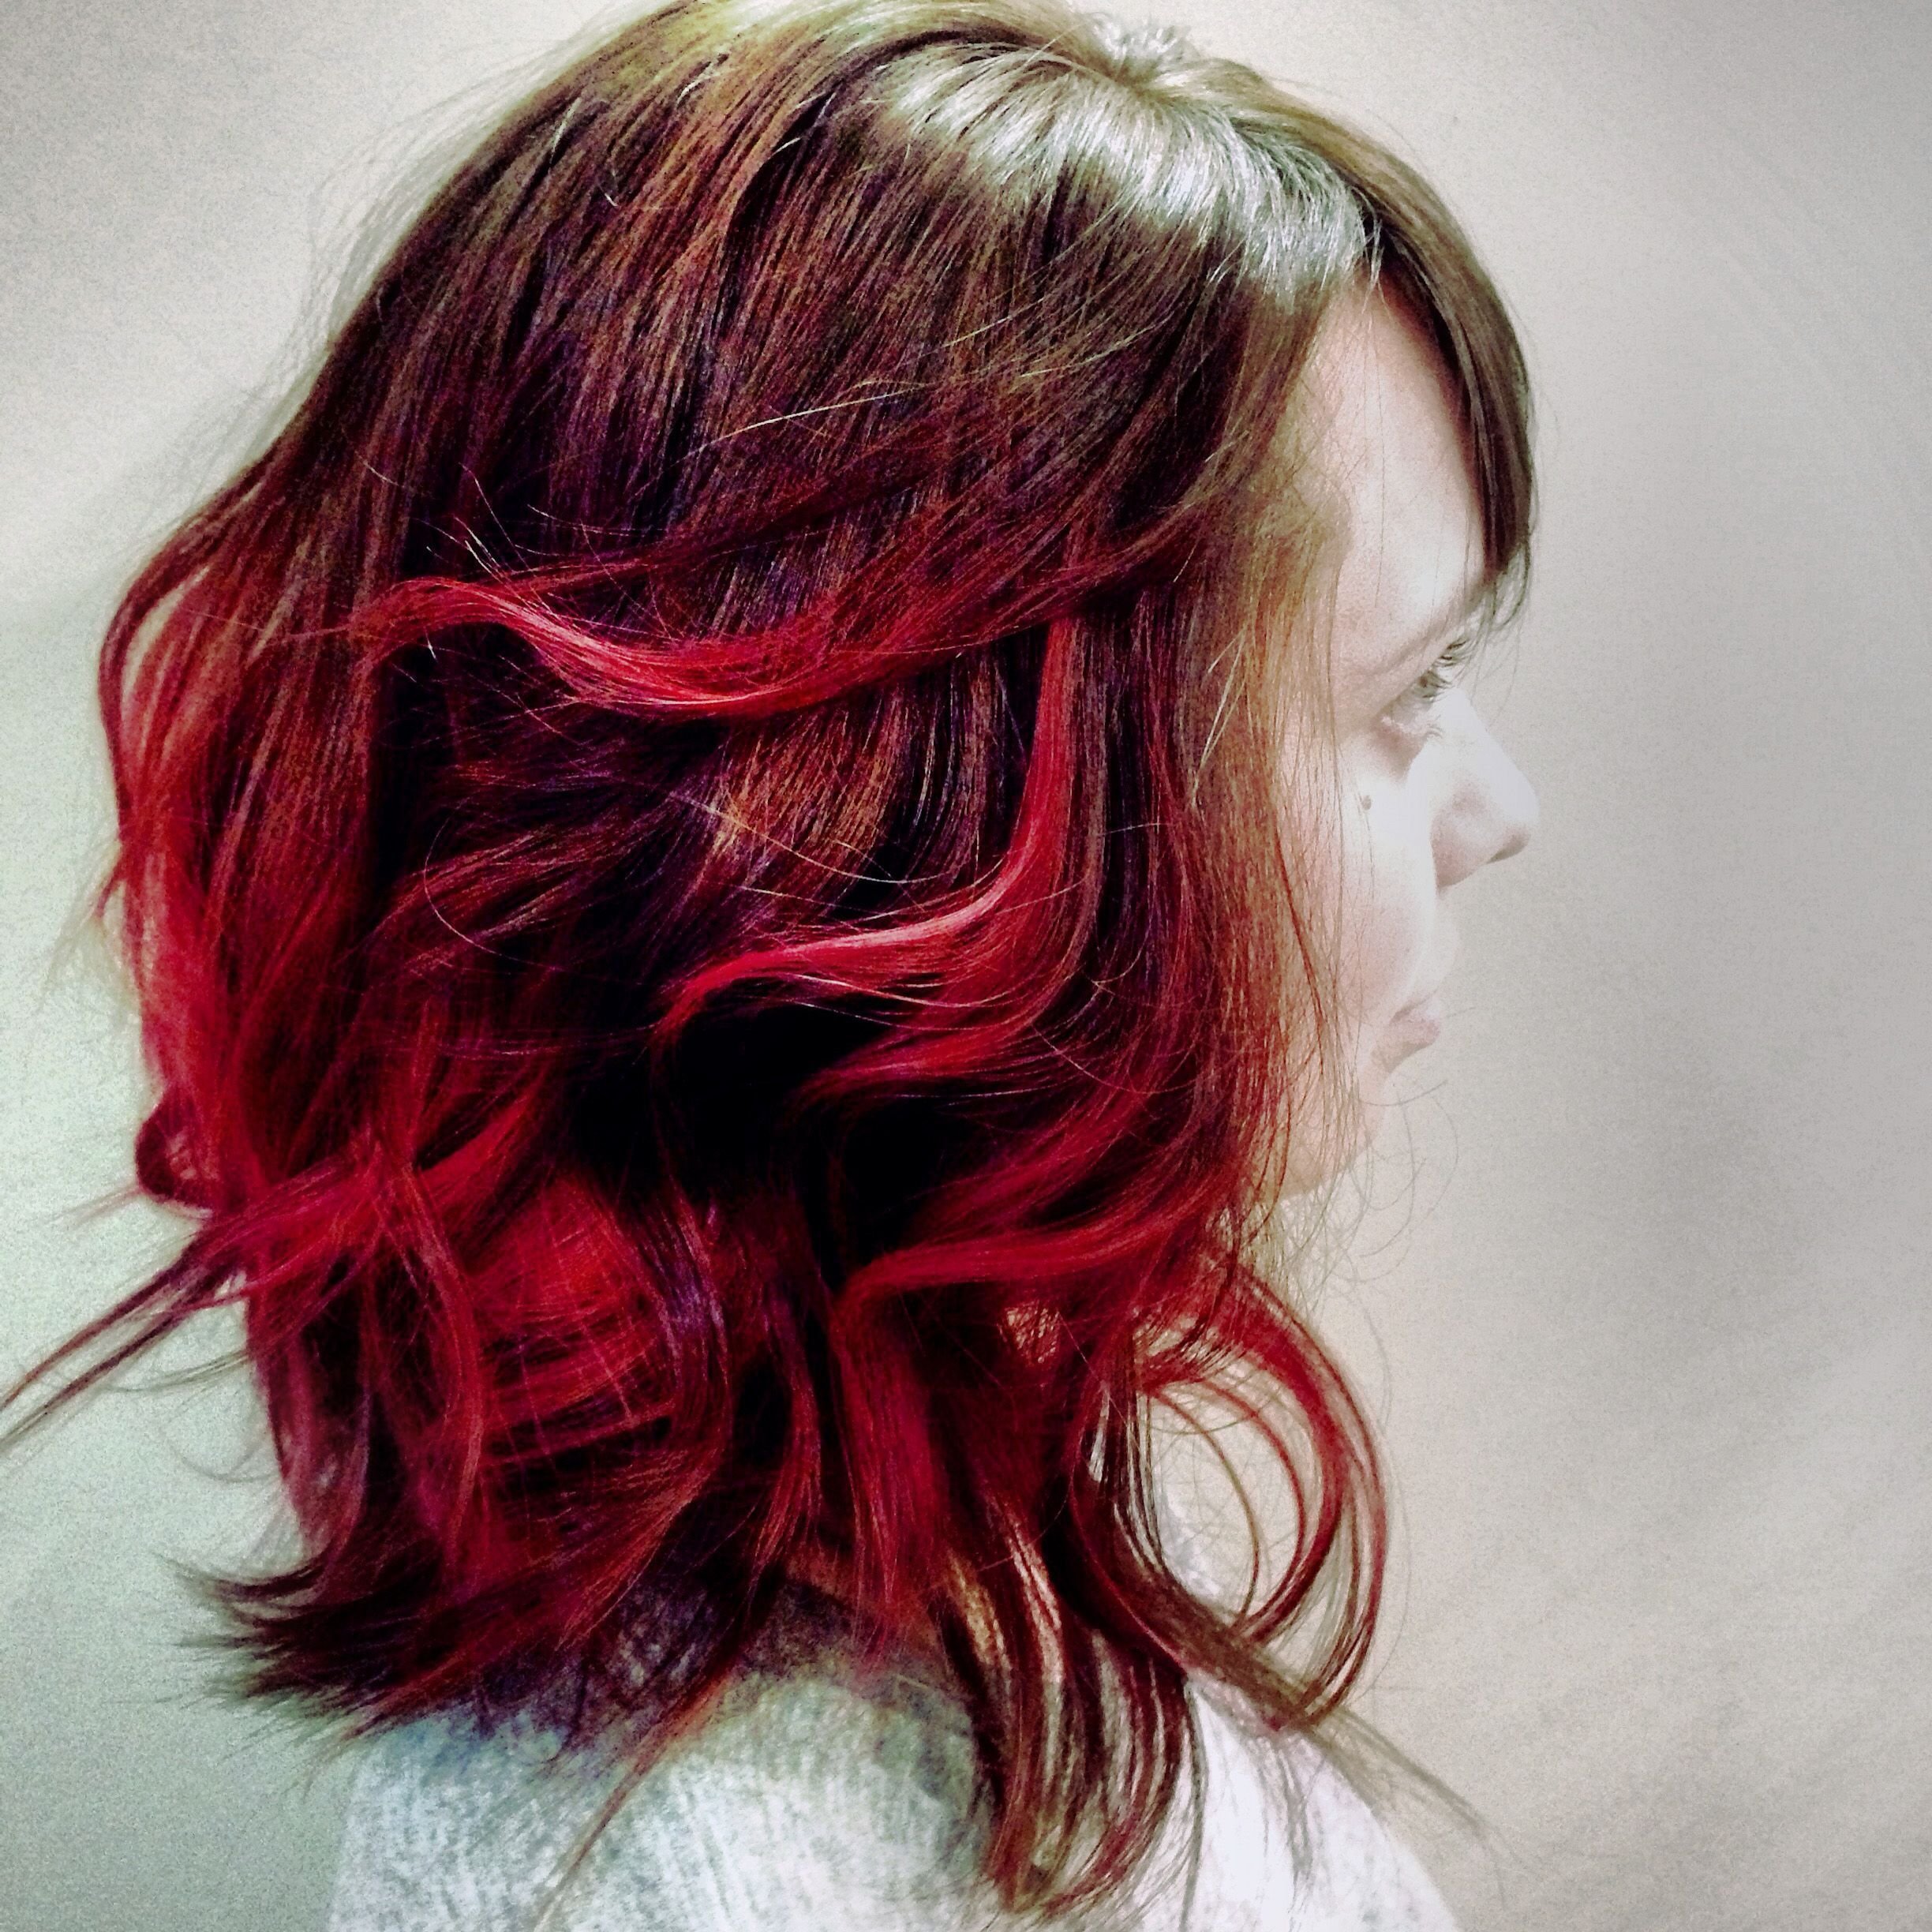 She likes red. Мелирование на красные волосы. Мелирование красным цветом на темные волосы. Мелирование красным цветом на русые волосы. Красное мелирование на темные волосы.